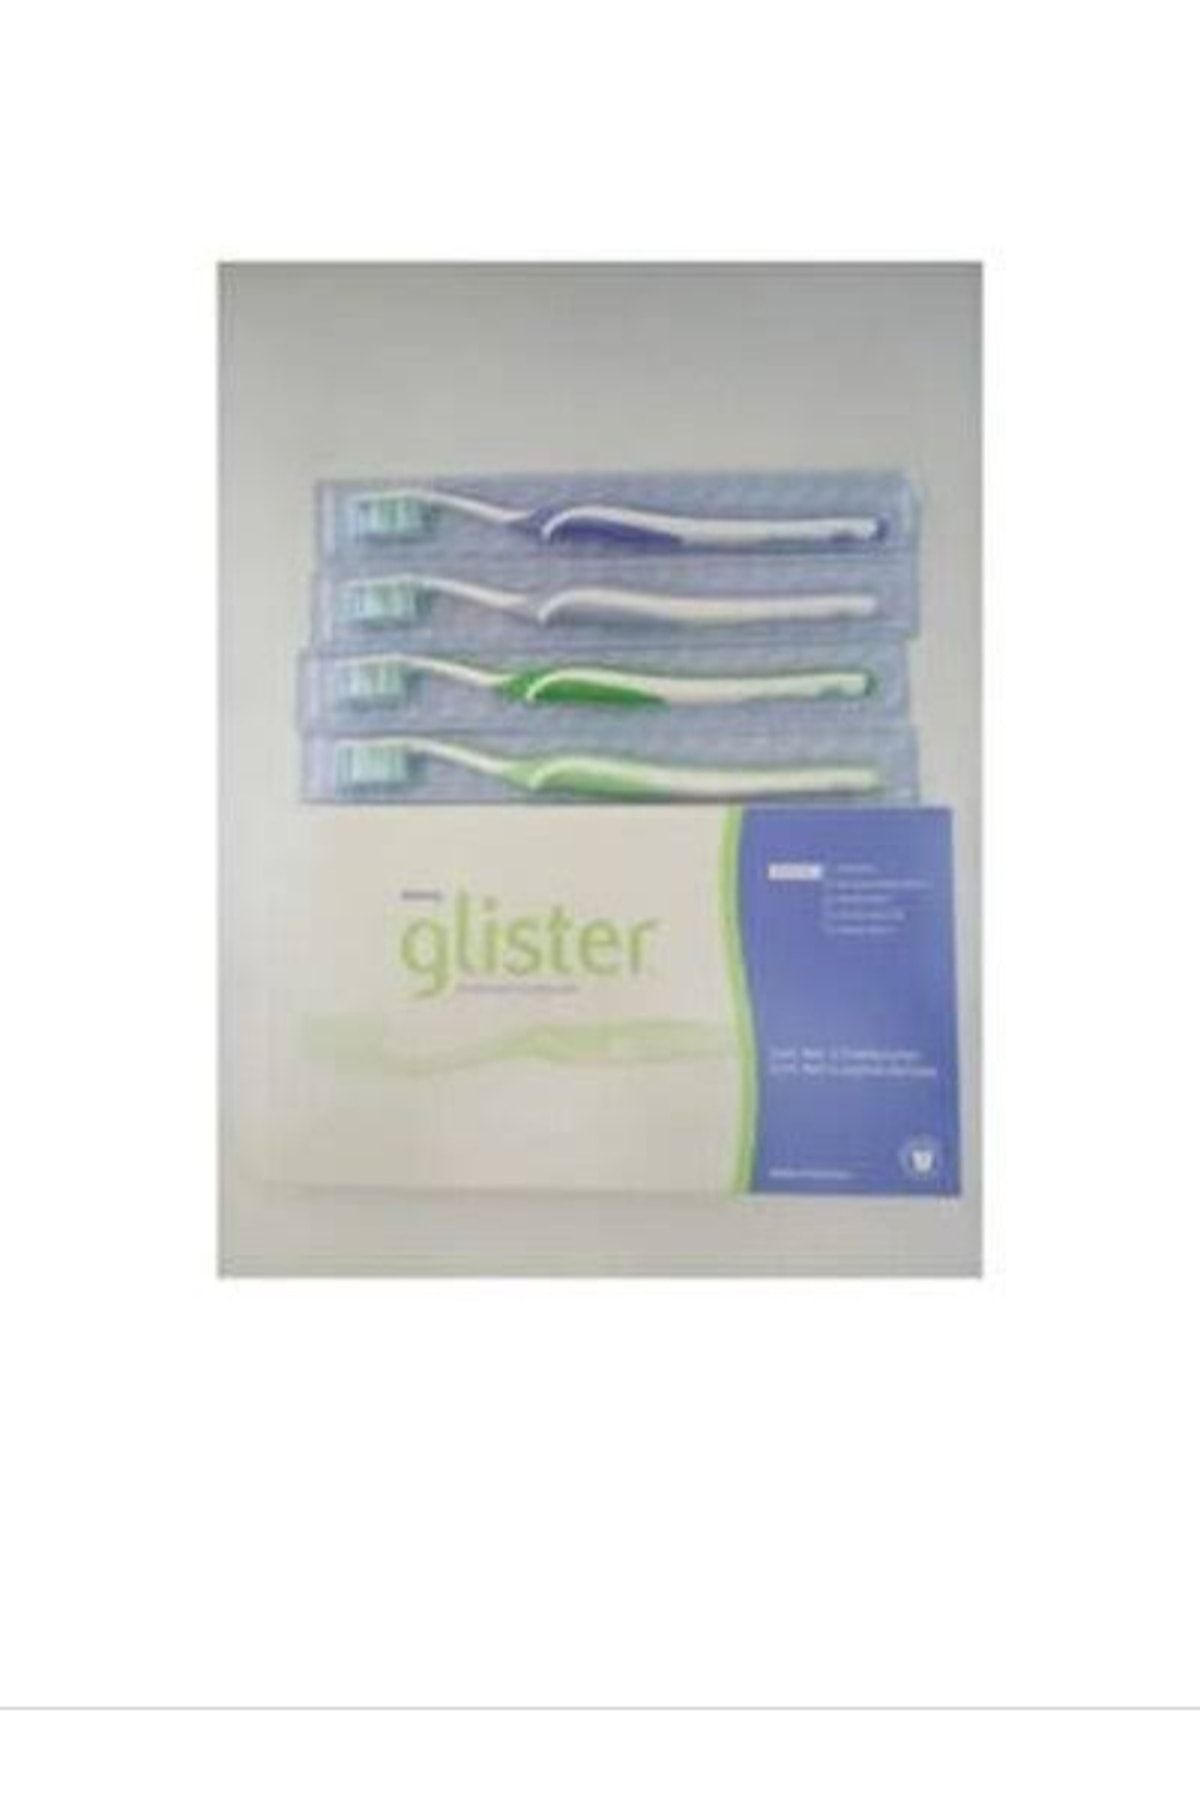 Amway مسواک فلورایدی گلیستر با قابلیت تمیزکاری کامل دهان